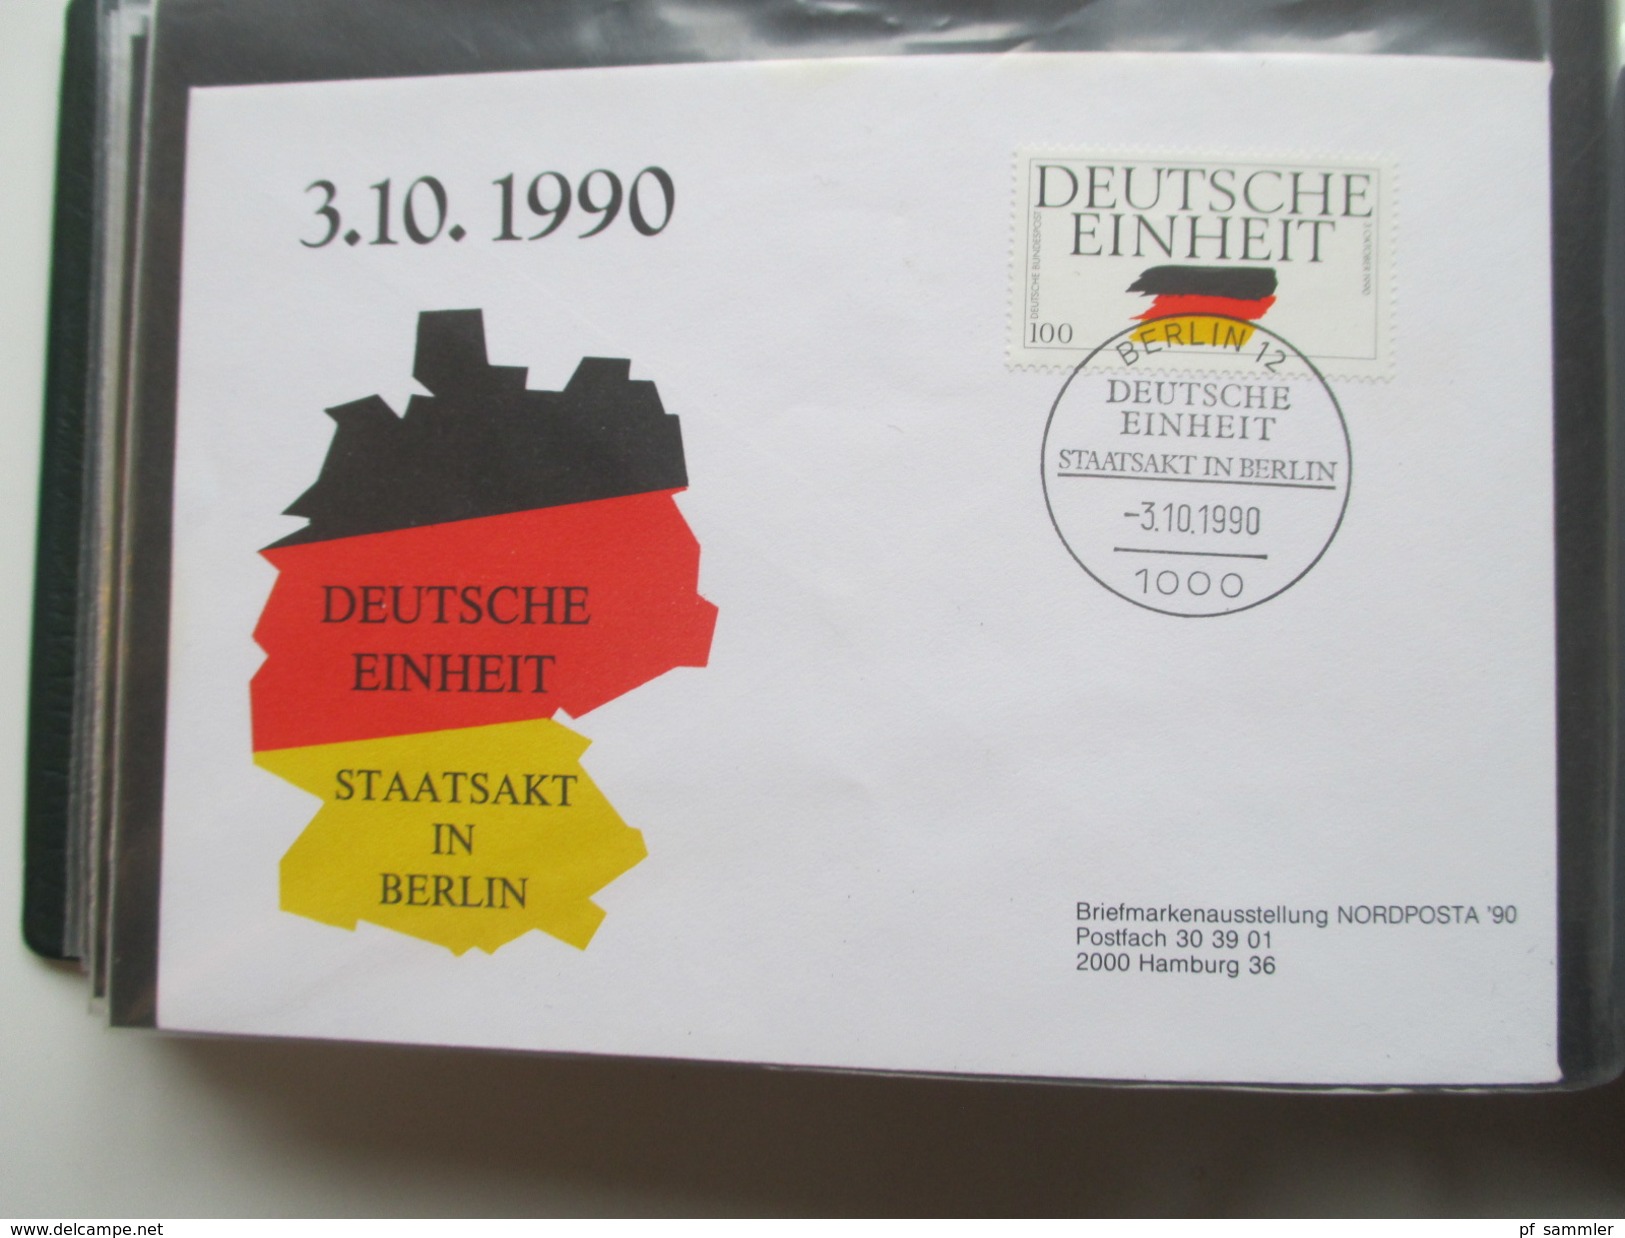 Sonderbelege / FDC 100 Stk. DDR / Berlin / BRD 1978 - 1990 Schifspost / Eisenbahn / Pabst auch einige Randstücke!